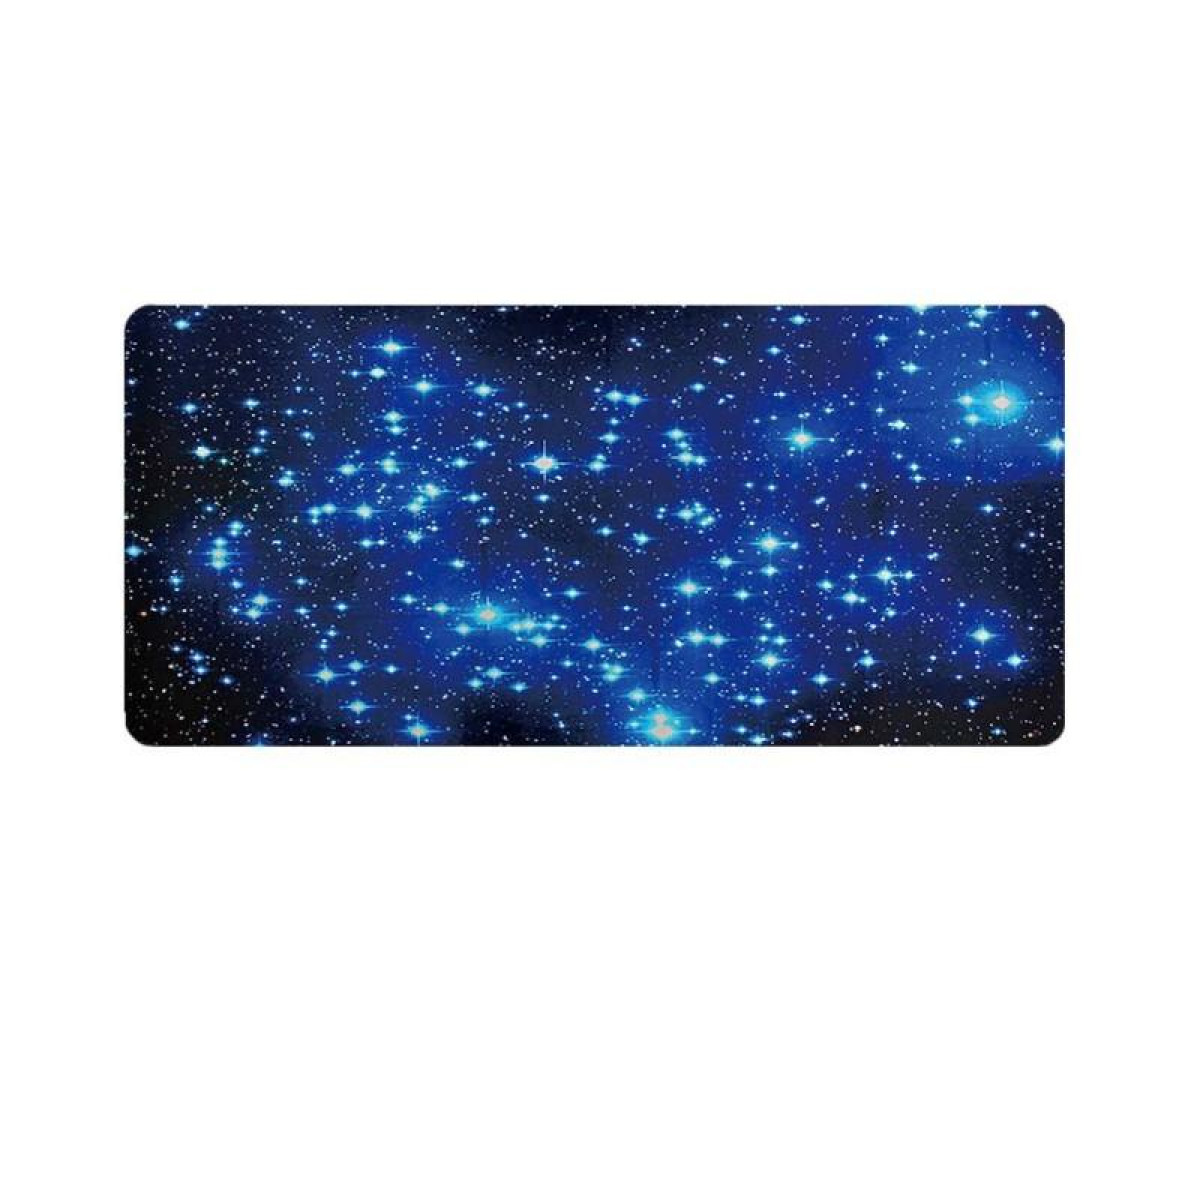 INF Großes Mauspad Sternenhimmelmuster Schwarz/Blau mit cm cm) cm (0,2 x 30x80 Mauspad 80